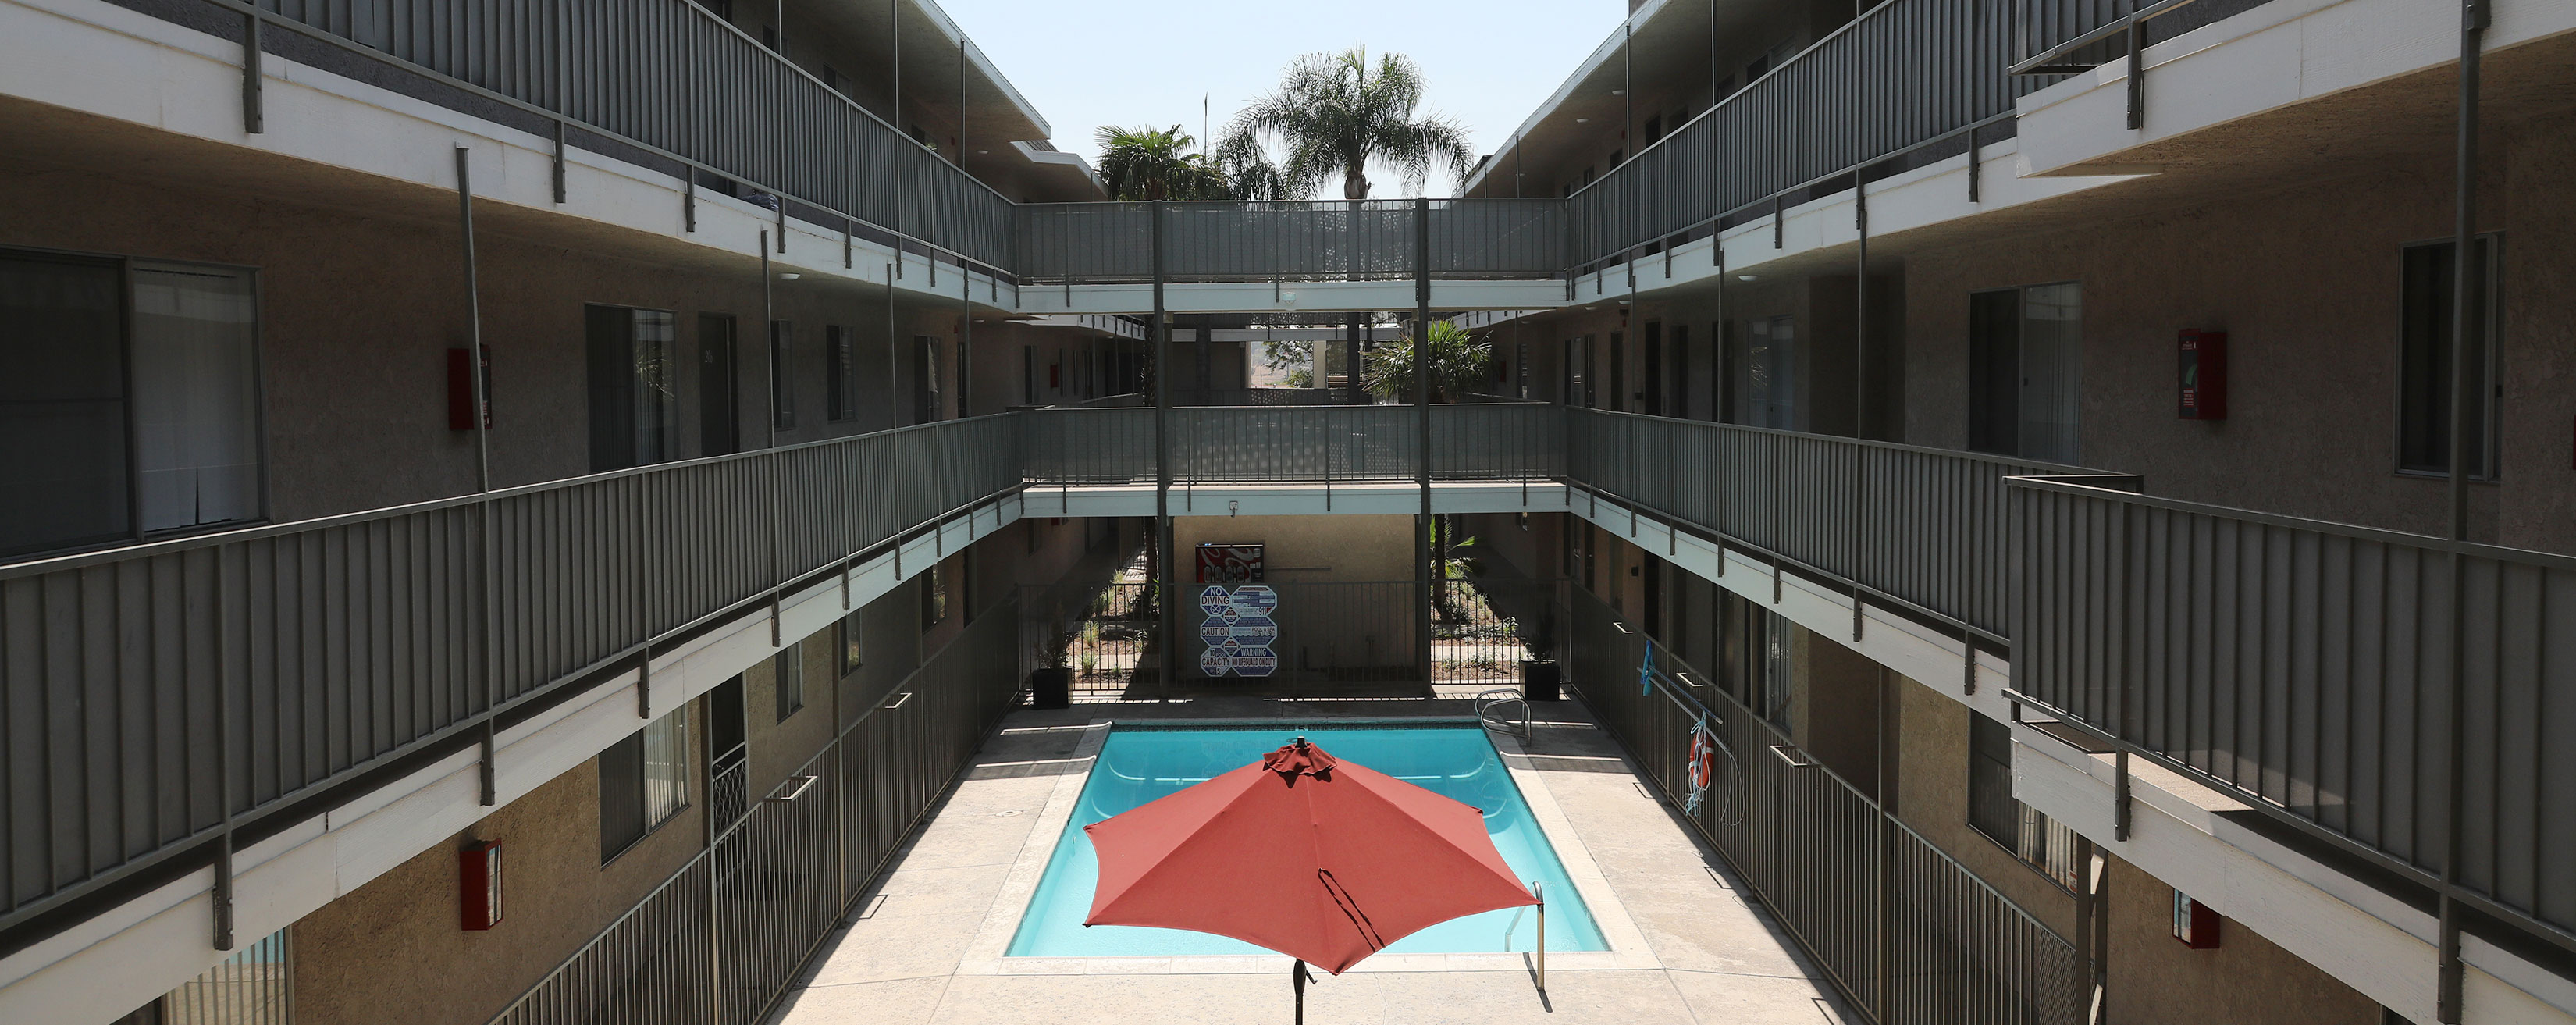 Pool area of Kendall Brook Apartments San Bernardino, CA